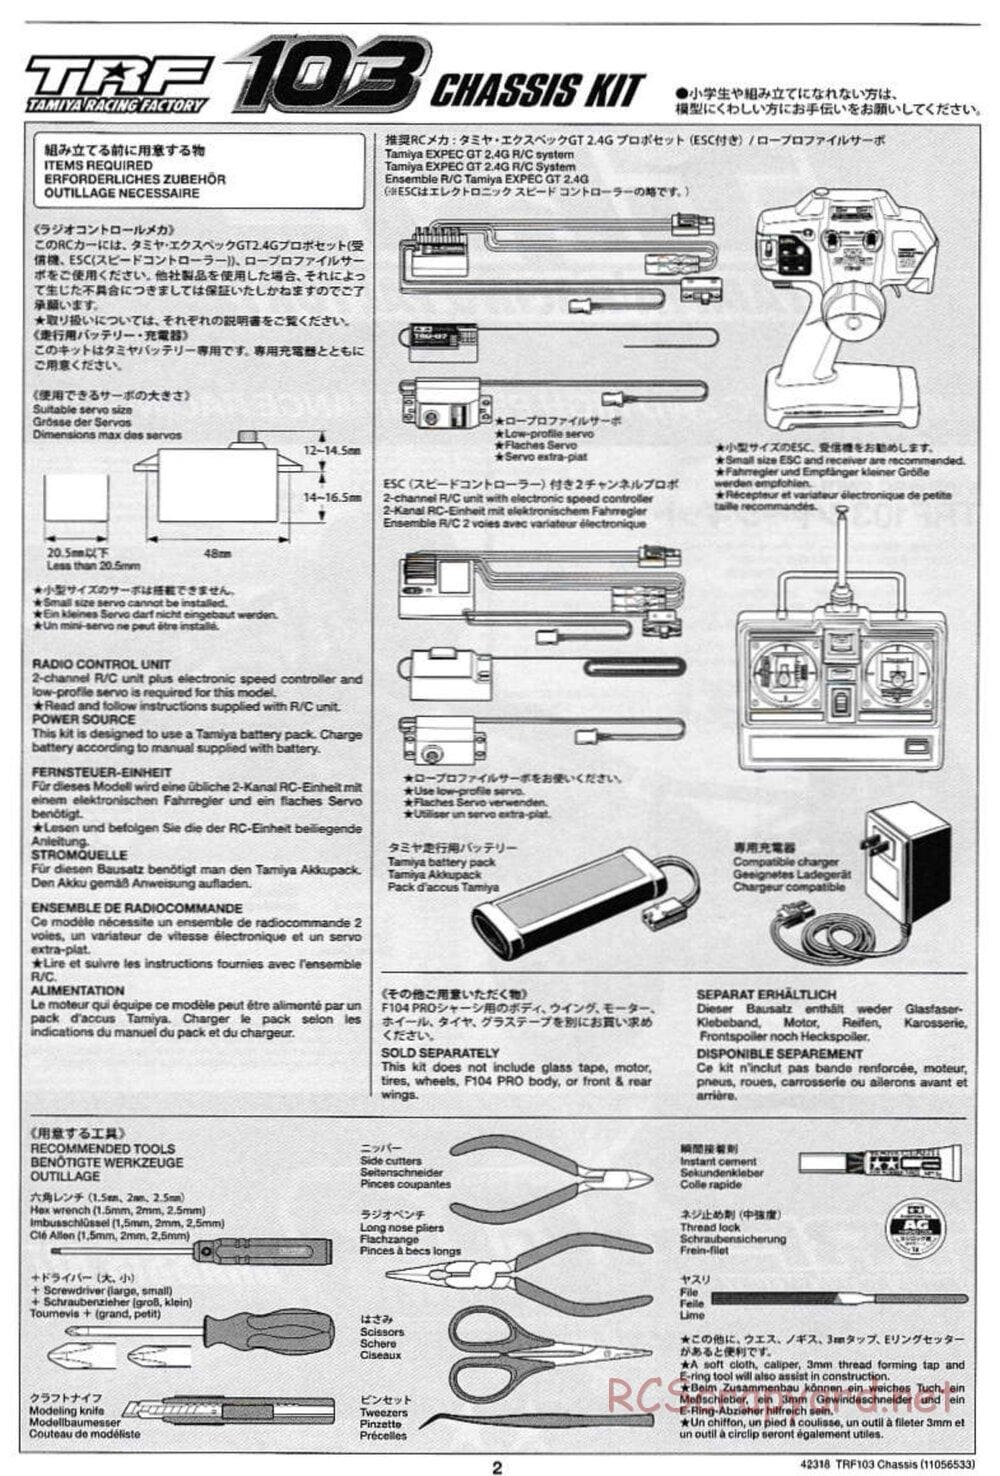 Tamiya - TRF103 Chassis - Manual - Page 2